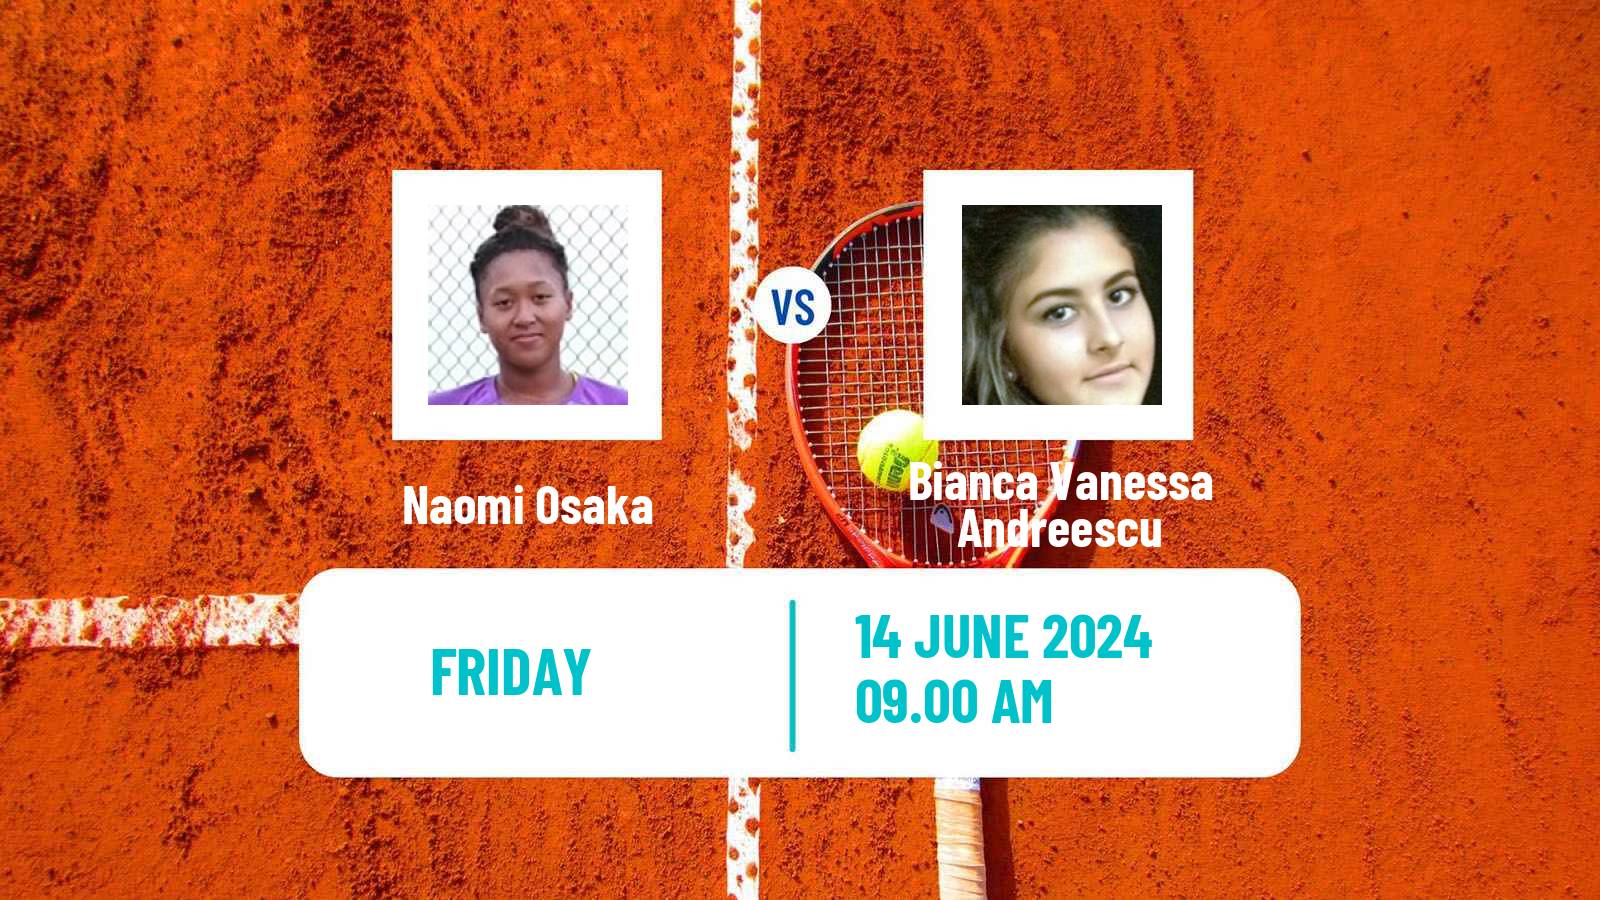 Tennis WTA Hertogenbosch Naomi Osaka - Bianca Vanessa Andreescu